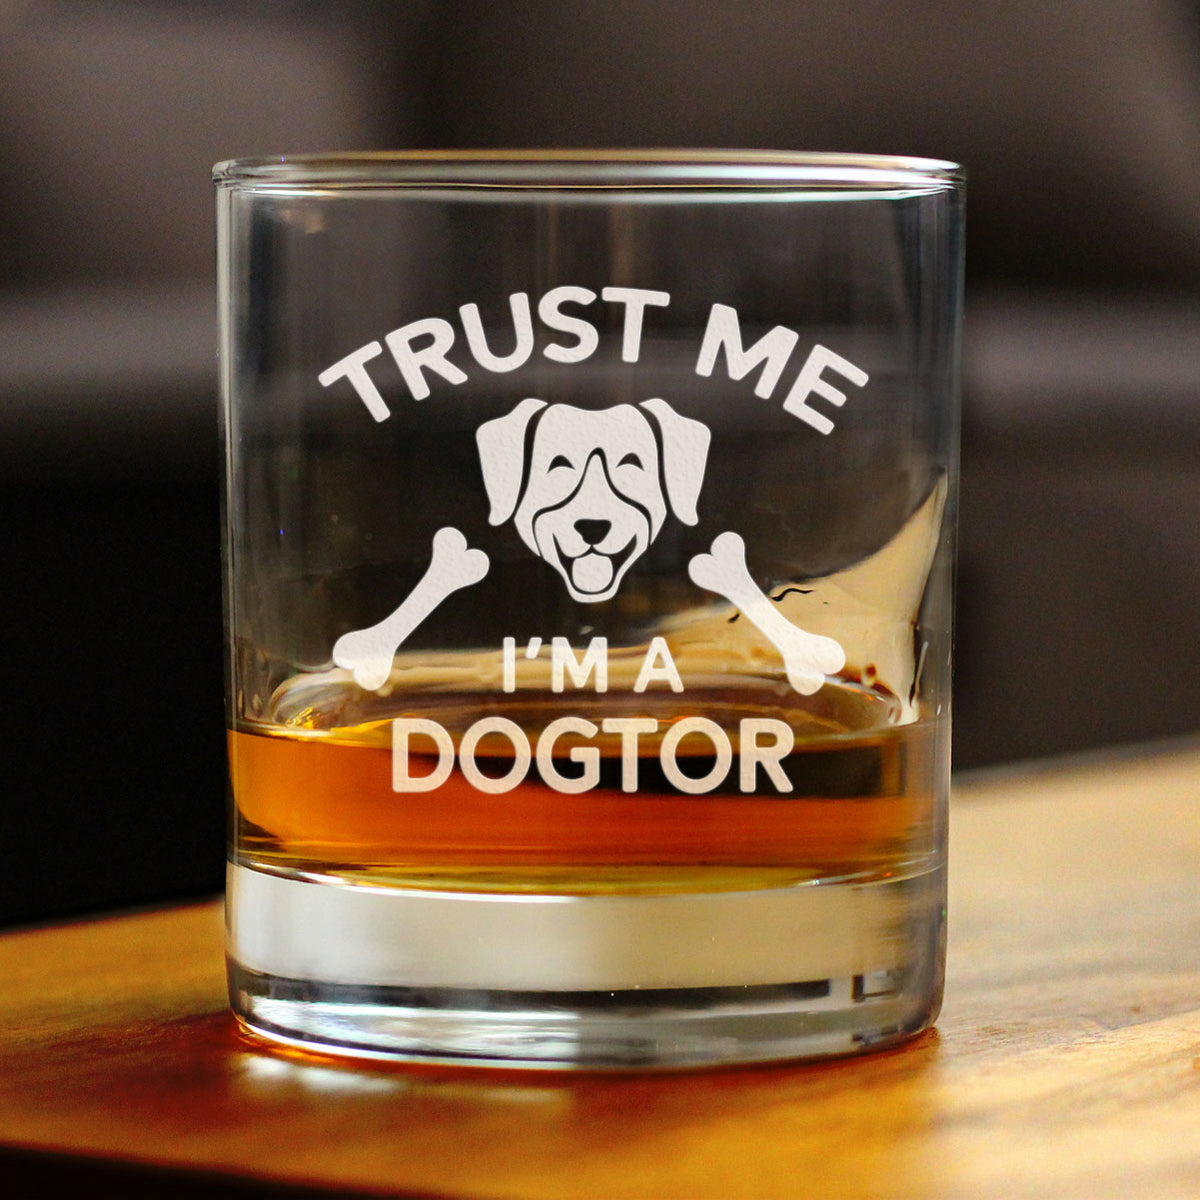 Dogtor - Whiskey Rocks Glass - Funny Dog Gifts for Veterinarians and Vet Techs - 10.25 Oz Glasses